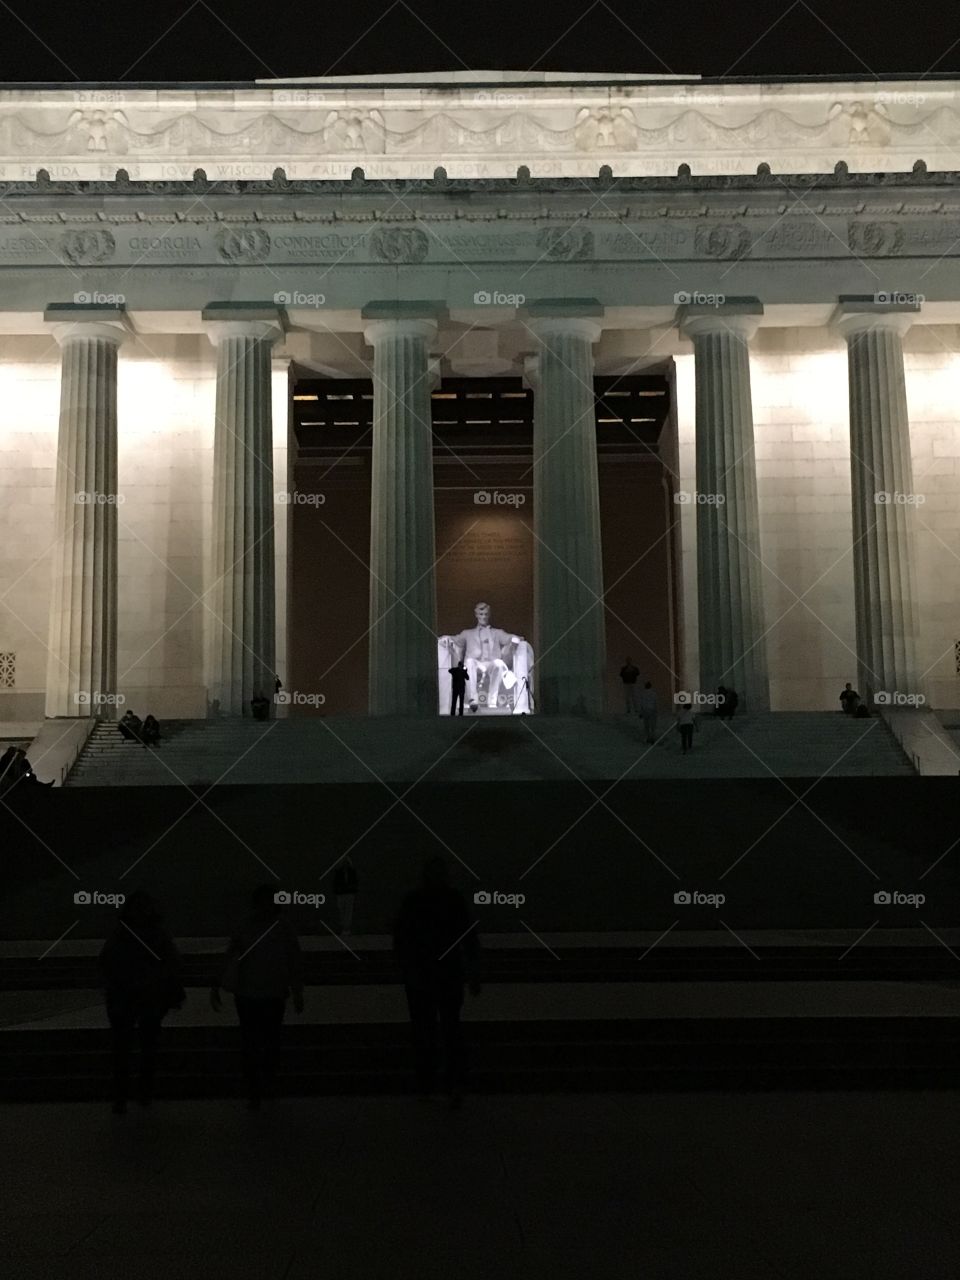 Lincoln memorial 